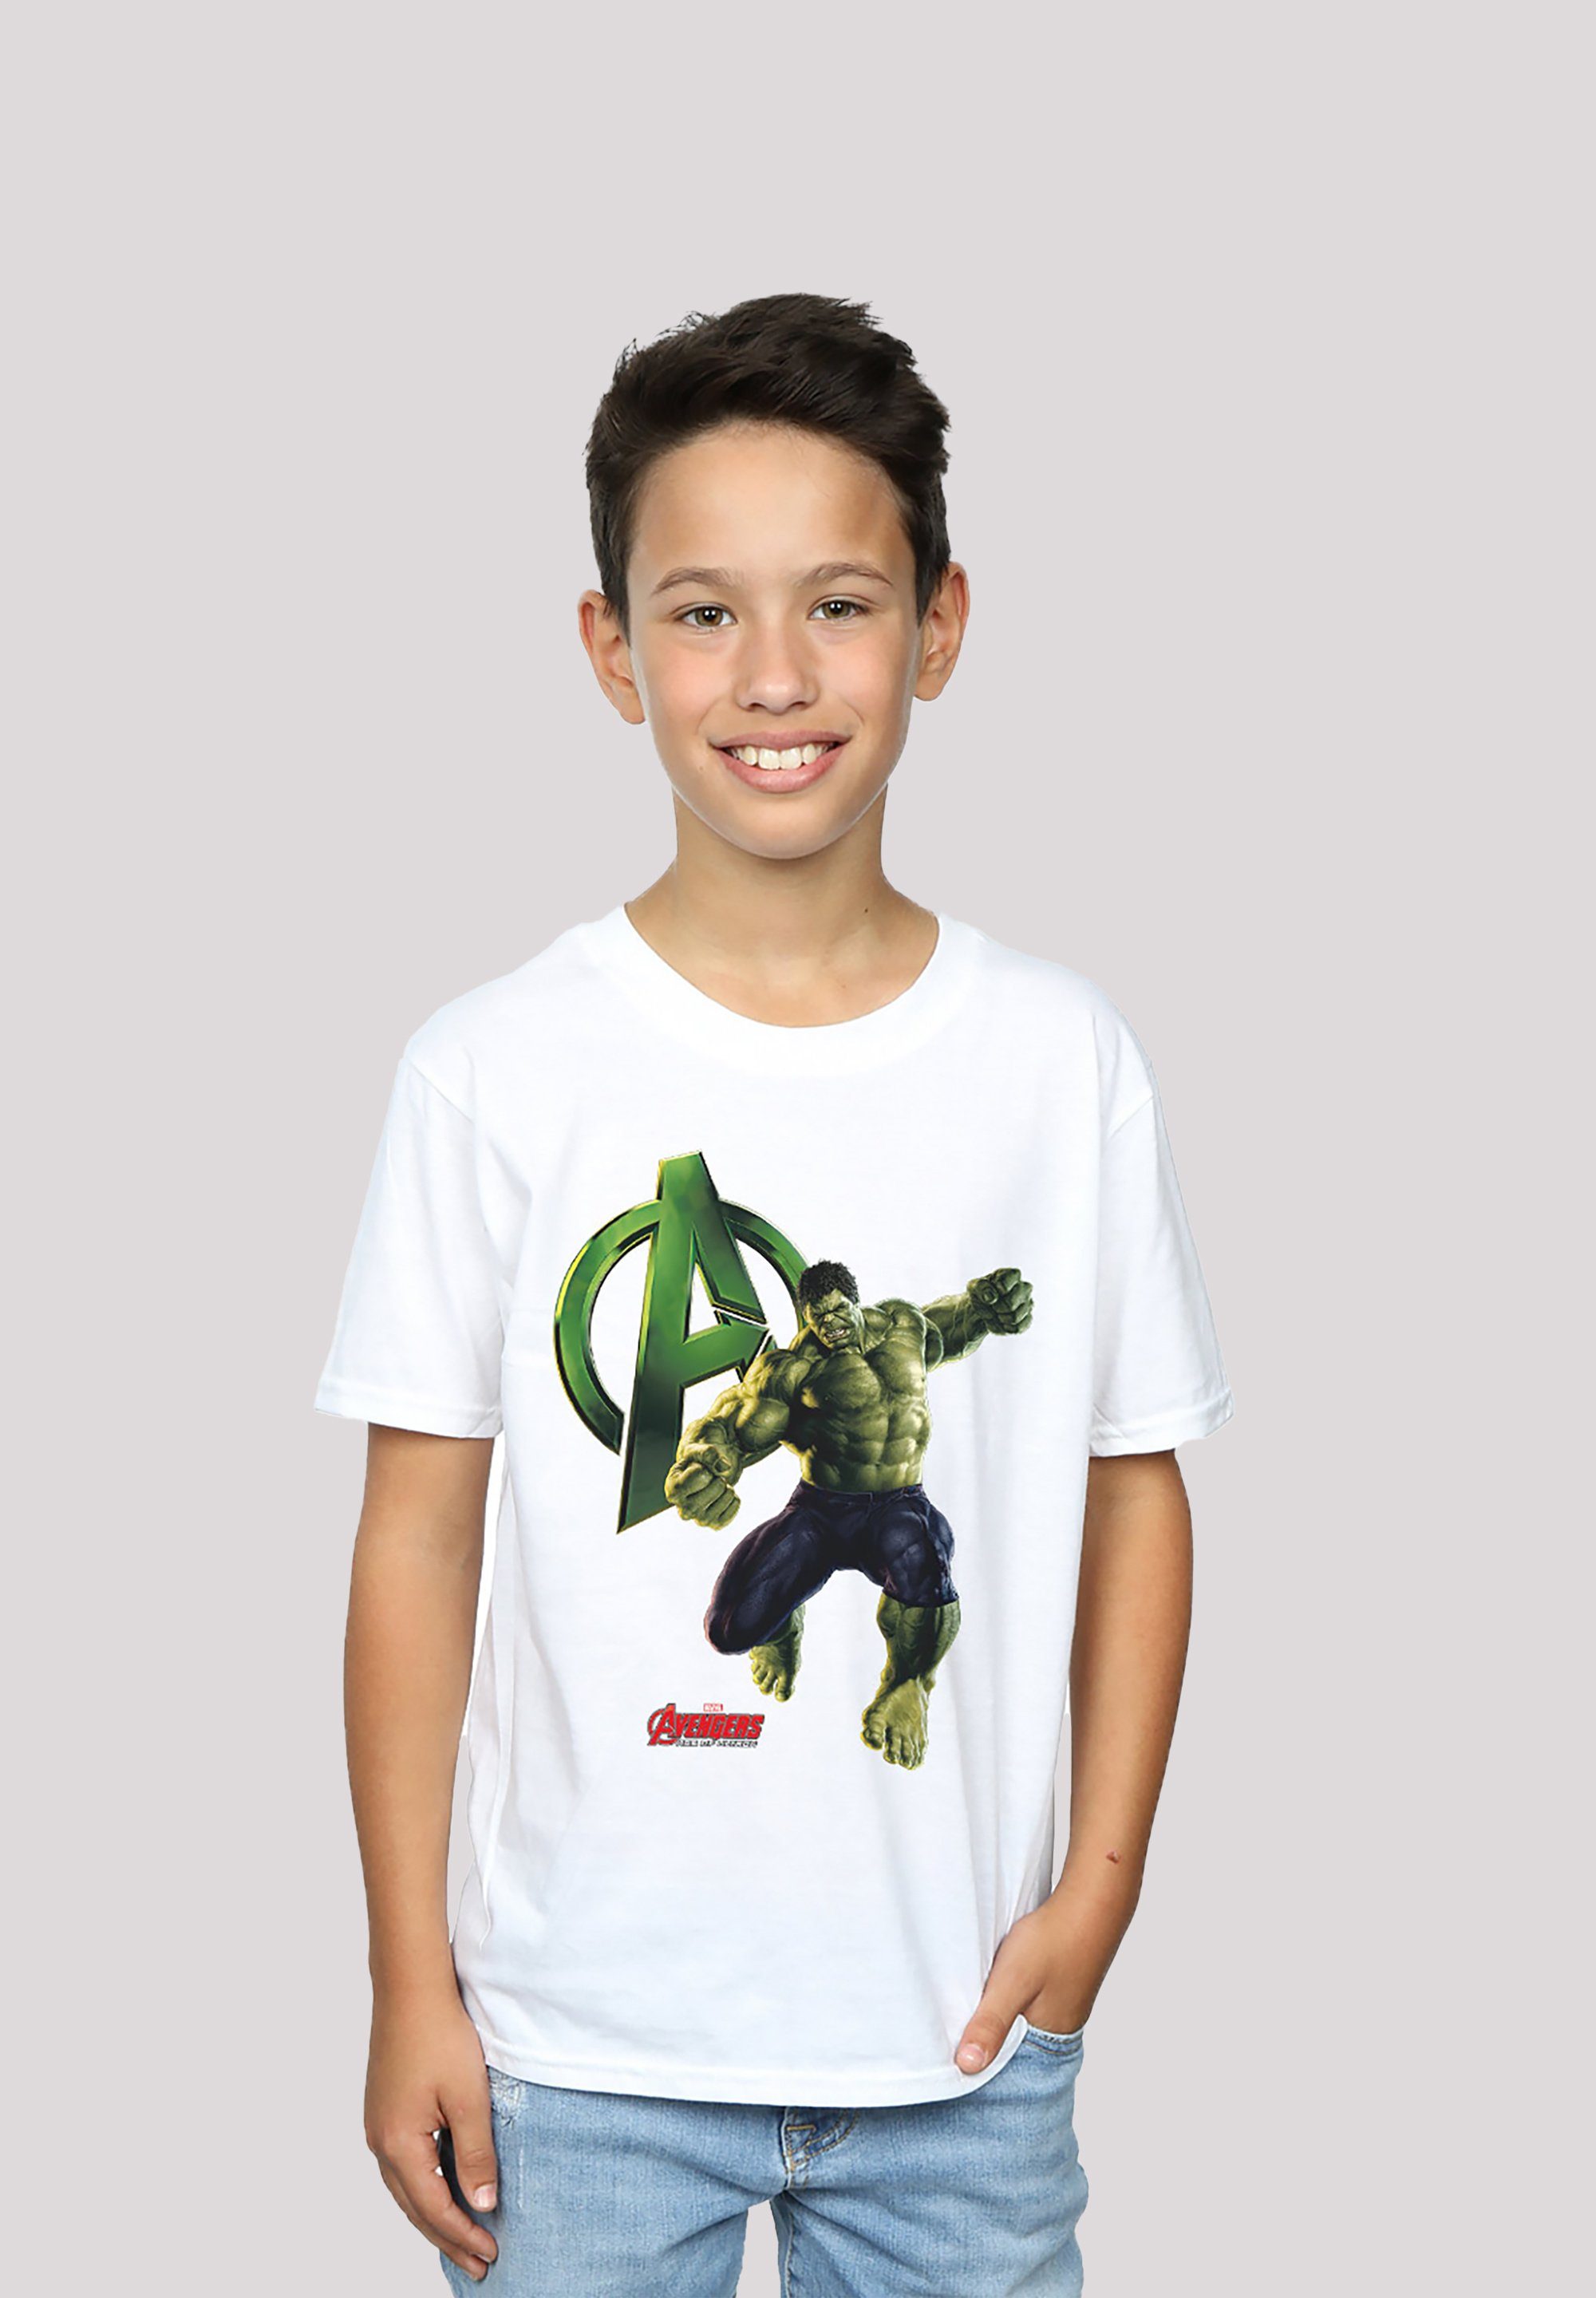 F4NT4STIC T-Shirt Age Ultron Avengers Hulk Incredible of Marvel Print